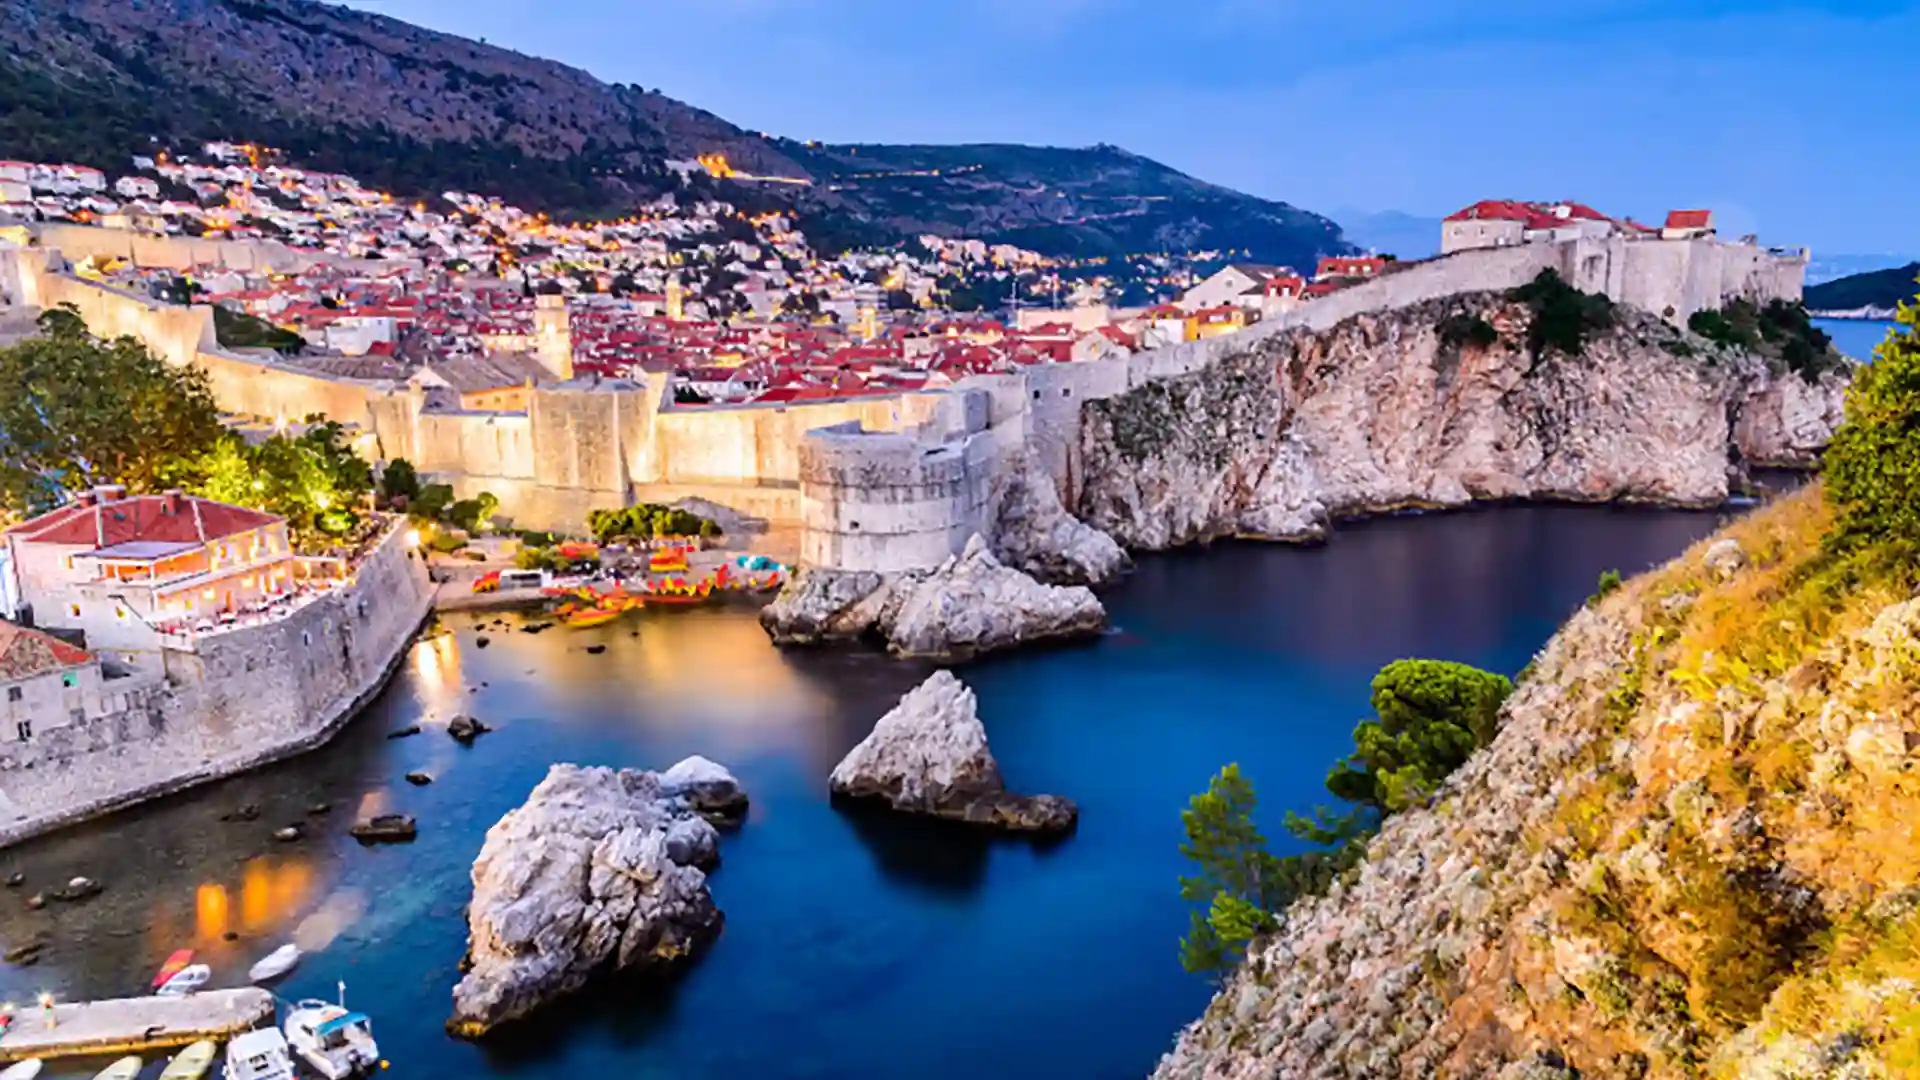 View of city and rocky landscape along coastline in Dubrovnik, Croatia.